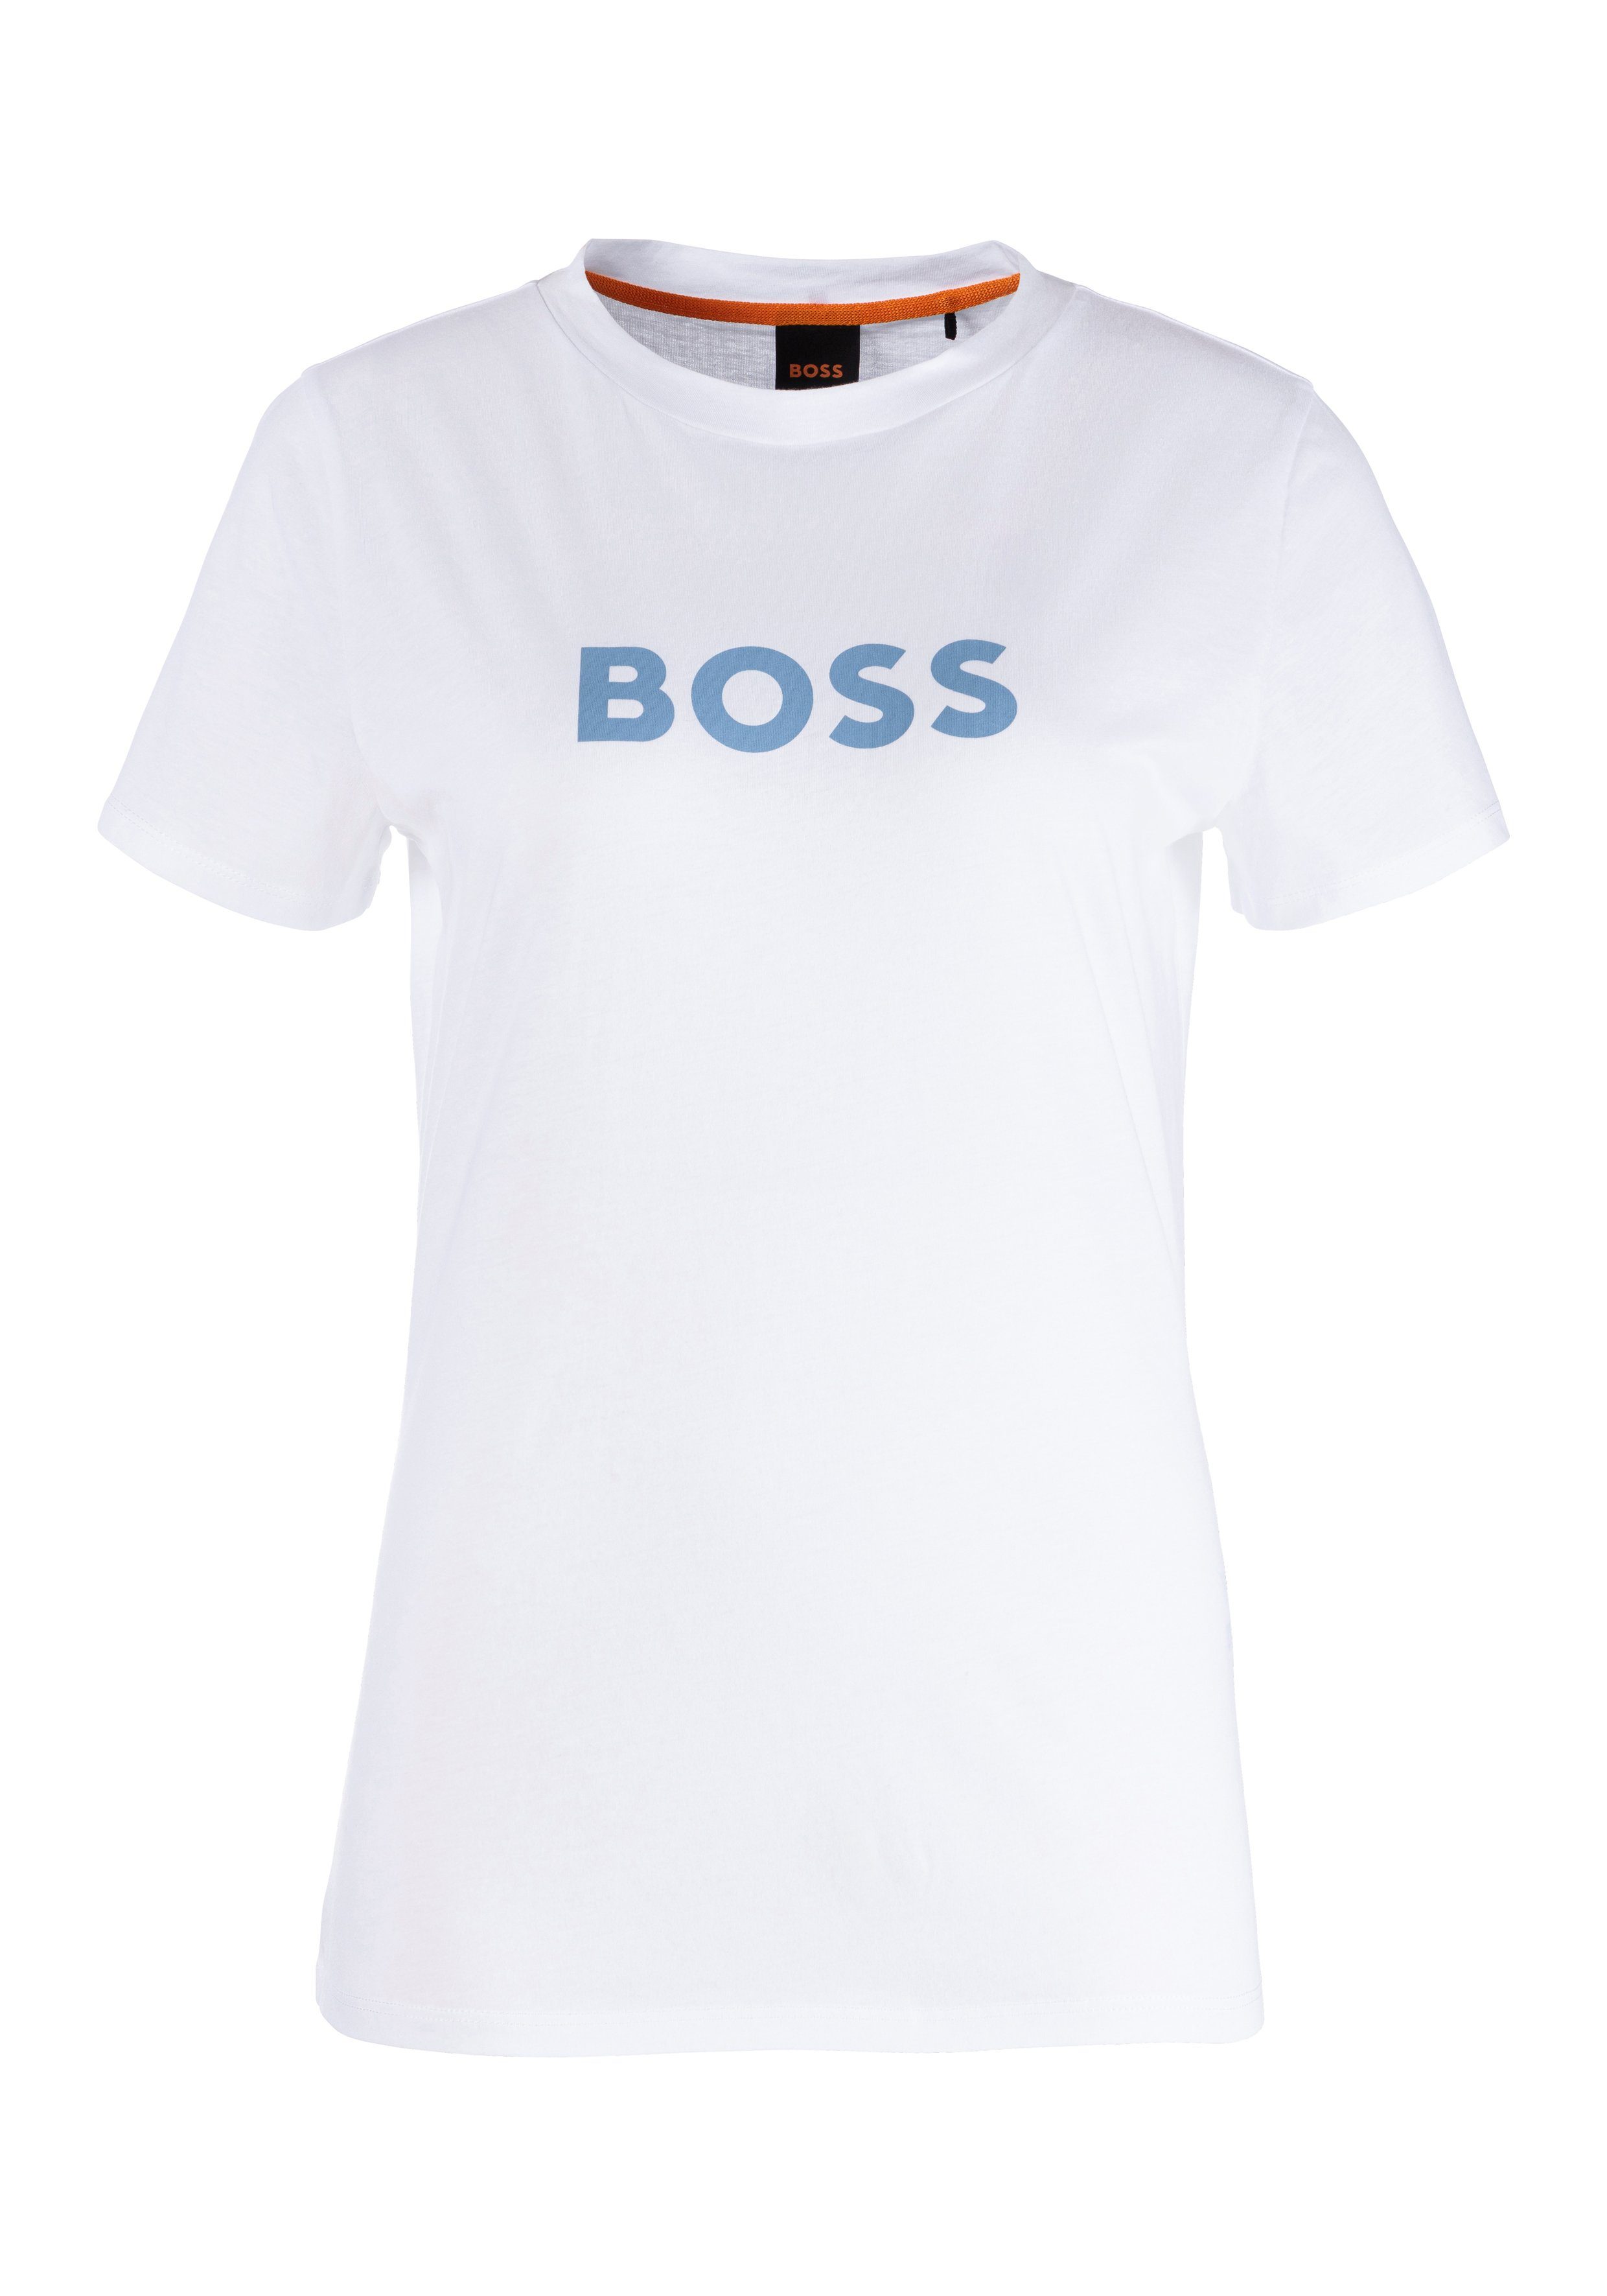 BOSS ORANGE T-Shirt C_Elogo Premium Damenmode mit kontrastfarbenem BOSS-Schriftzug